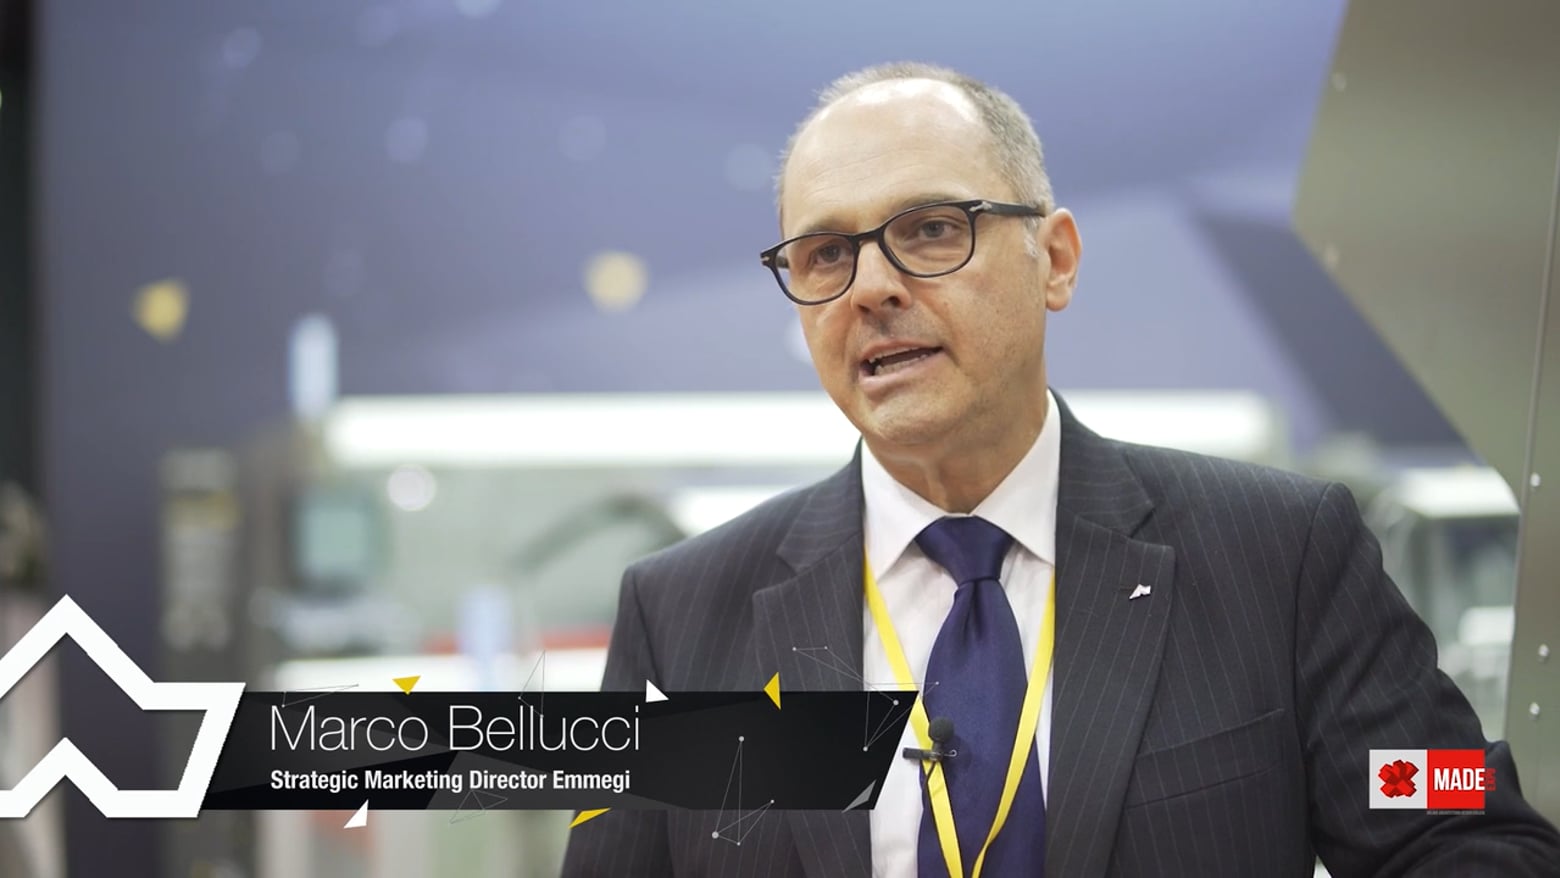 De Made als internationale handelsbeurs (Marco Bellucci) Emmegi